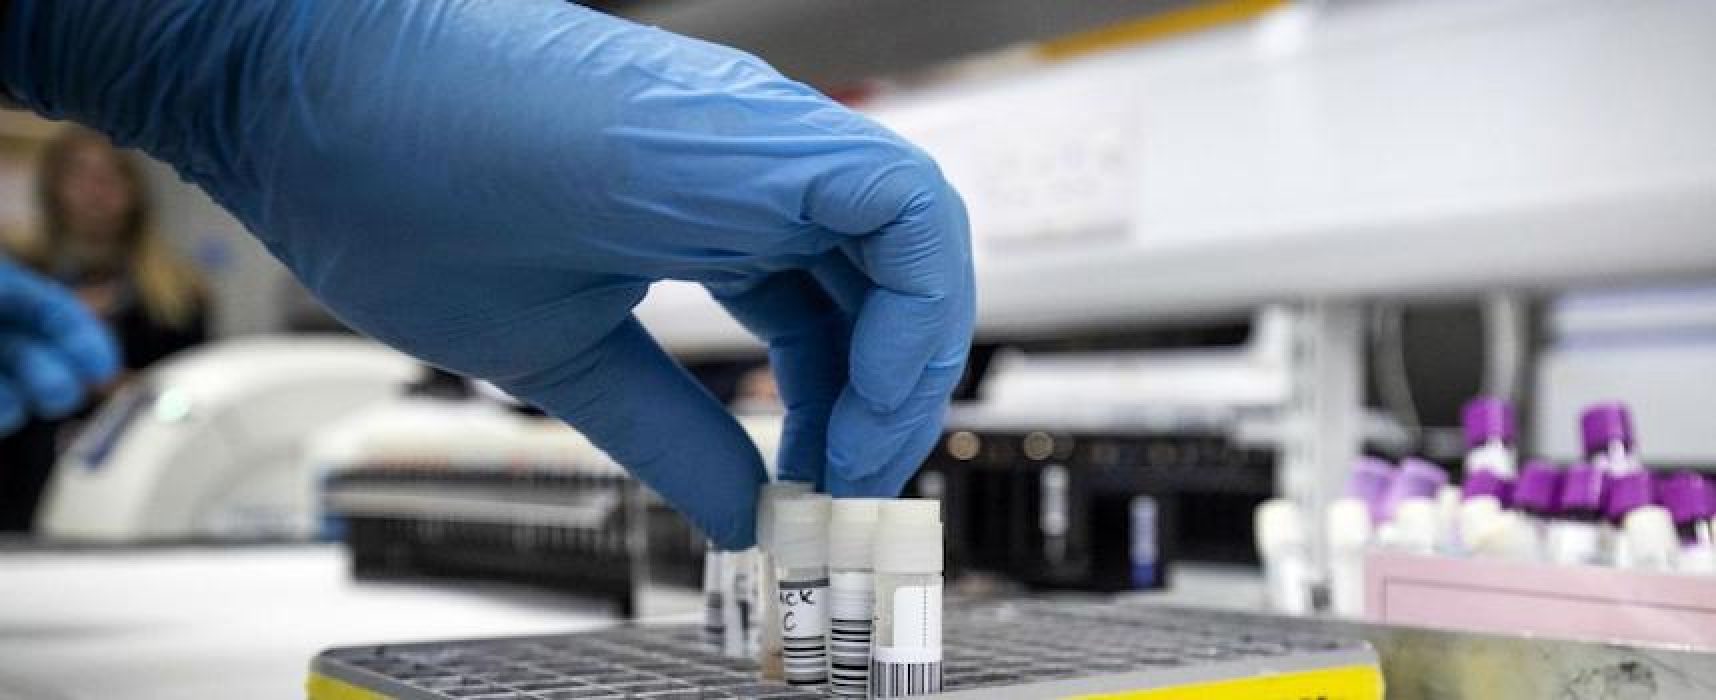 Coronavirus: cala numero test, 1573 i nuovi casi con 3 decessi in Puglia